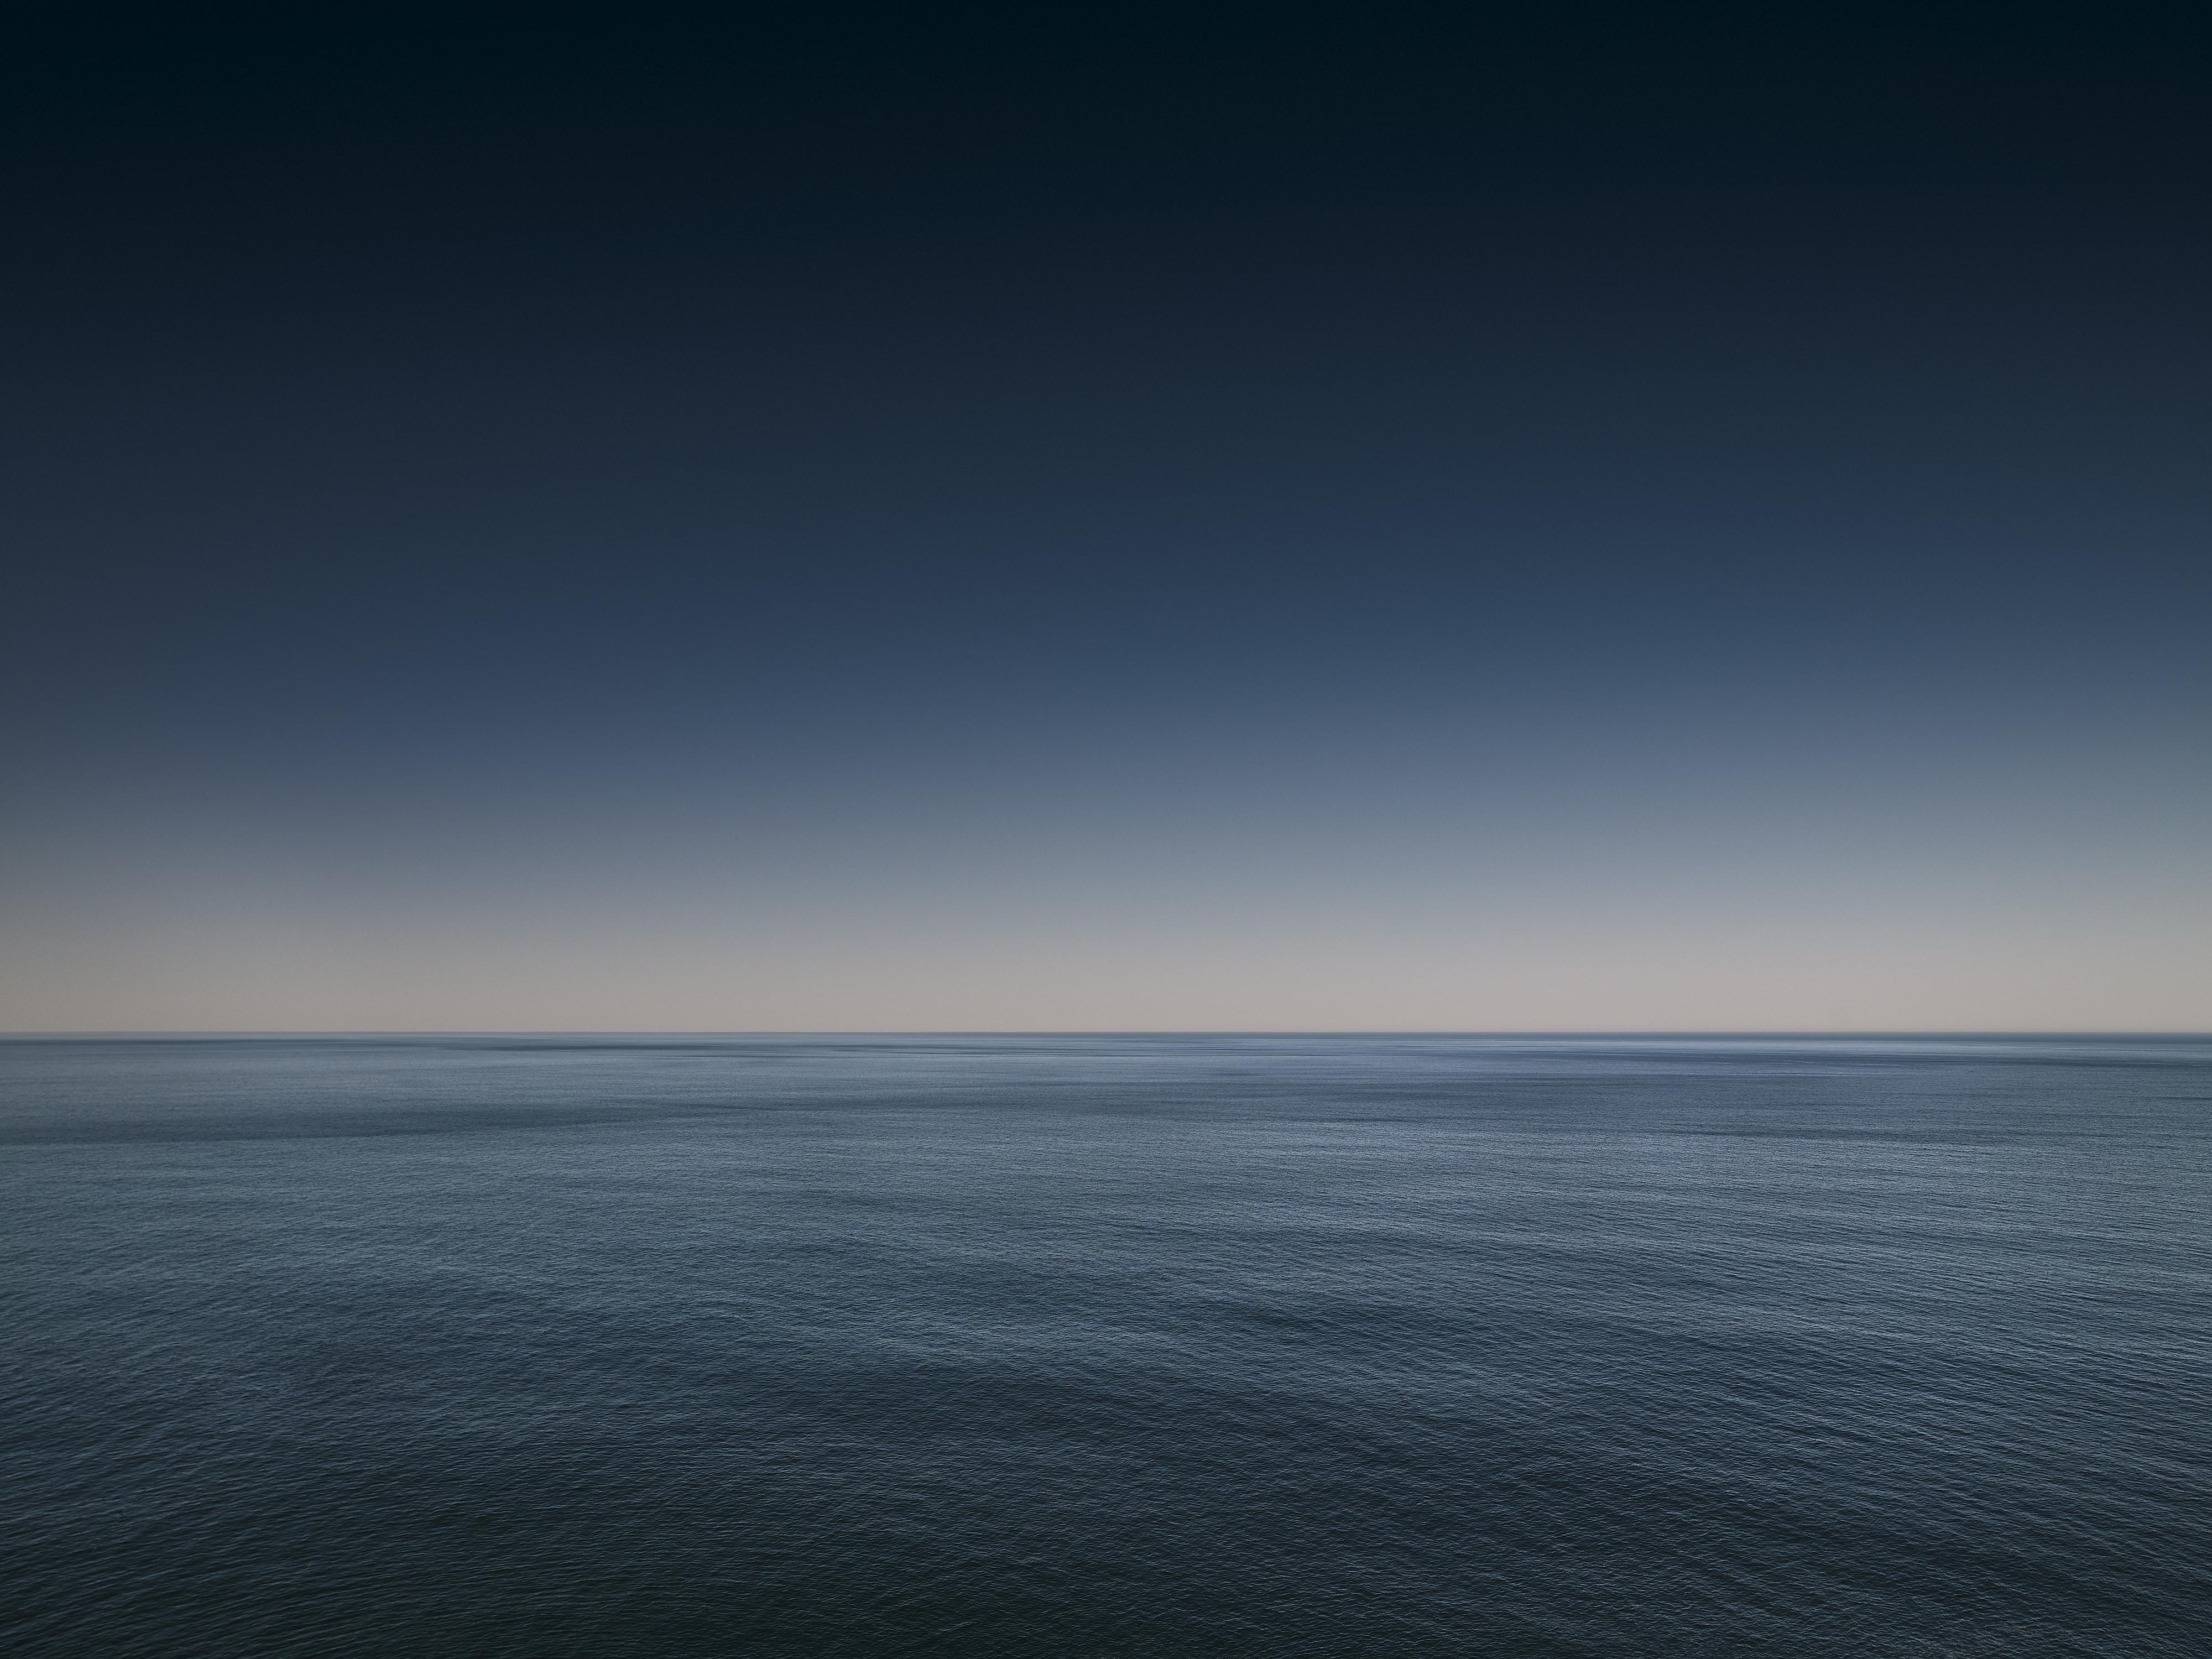 Frank Schott Landscape Print - Seascape I - large format photograph of blue tone horizon and sea